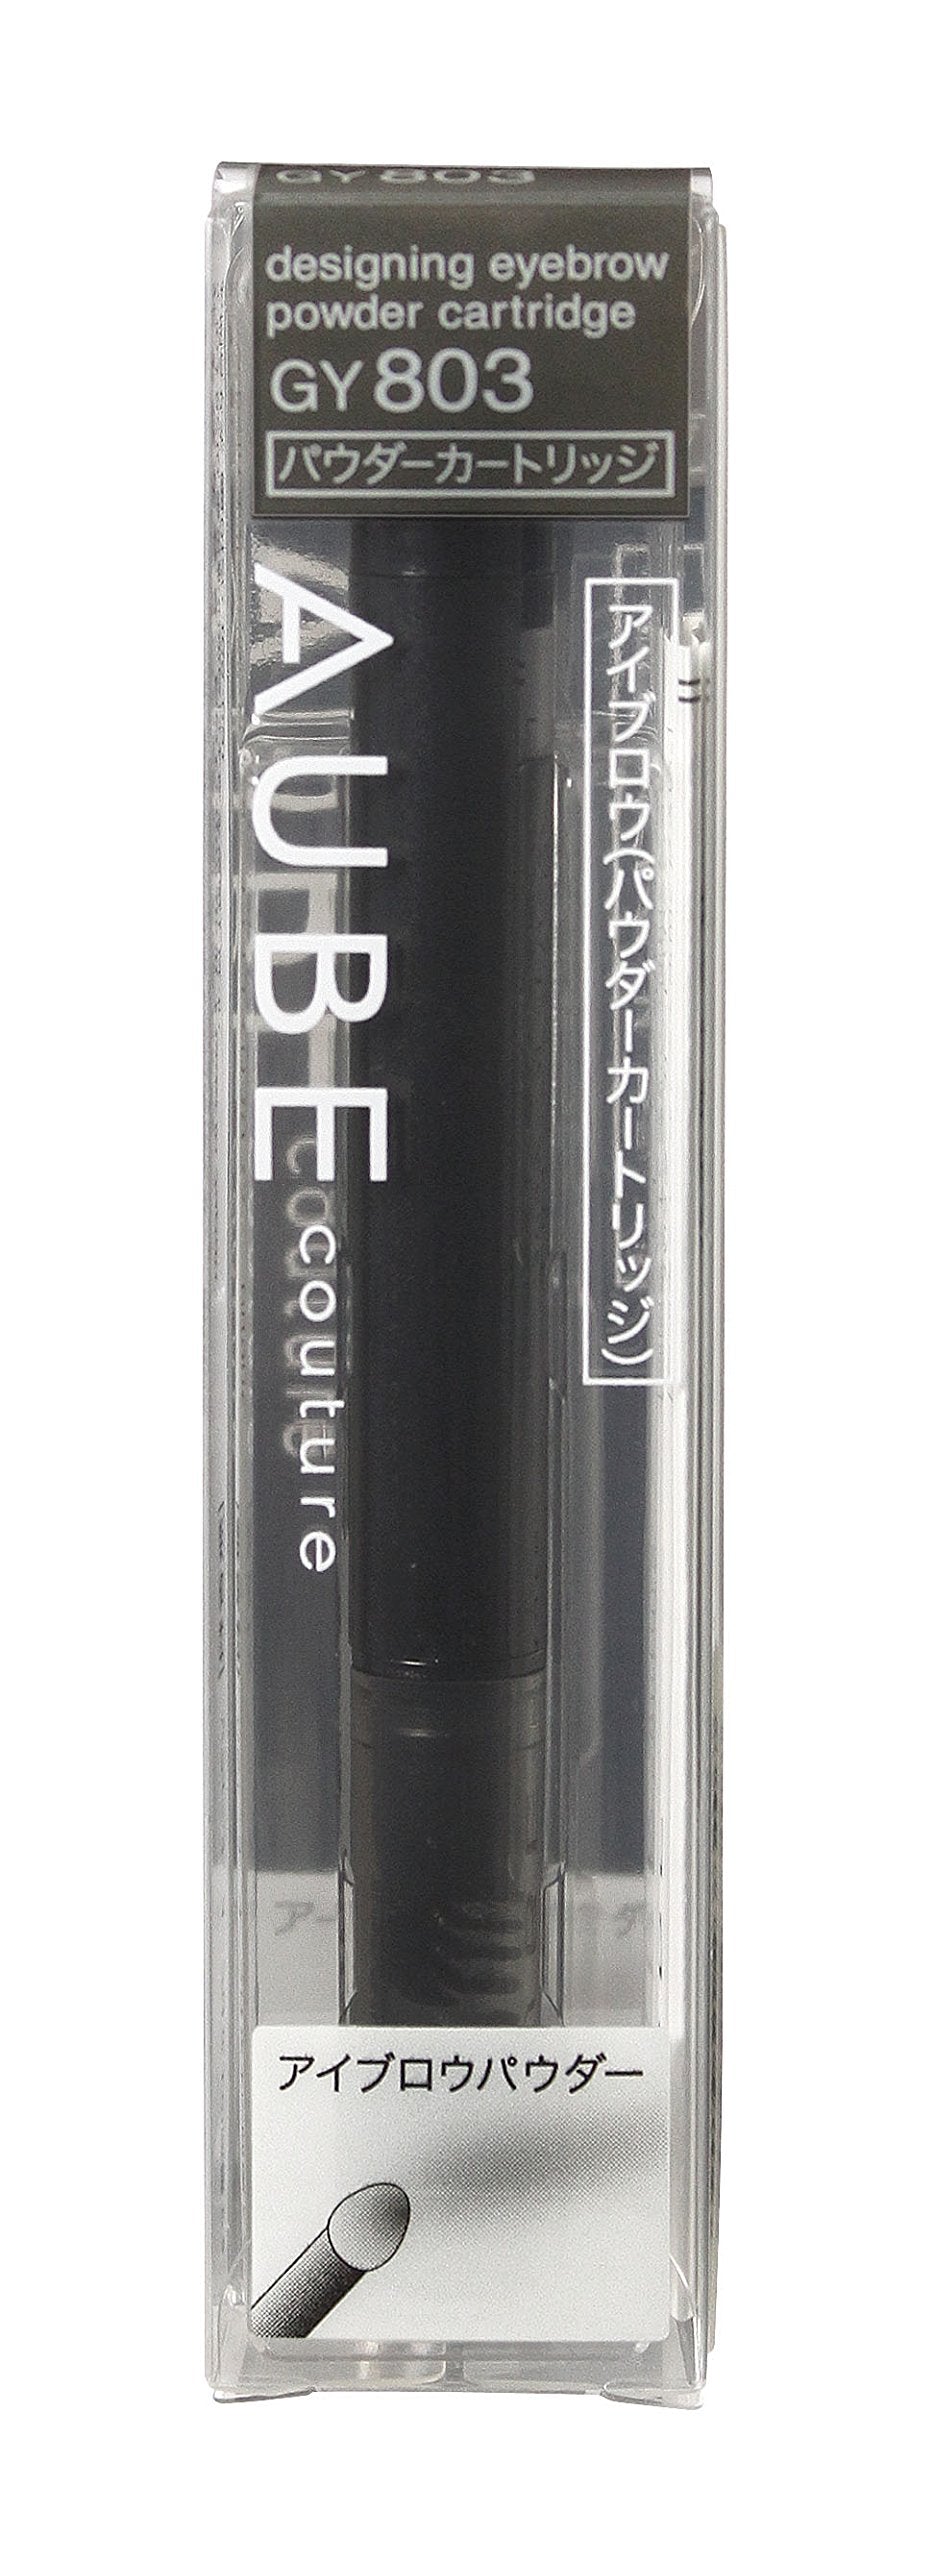 Orb Japan Sofina Eyebrow Powder Gy803 Designing